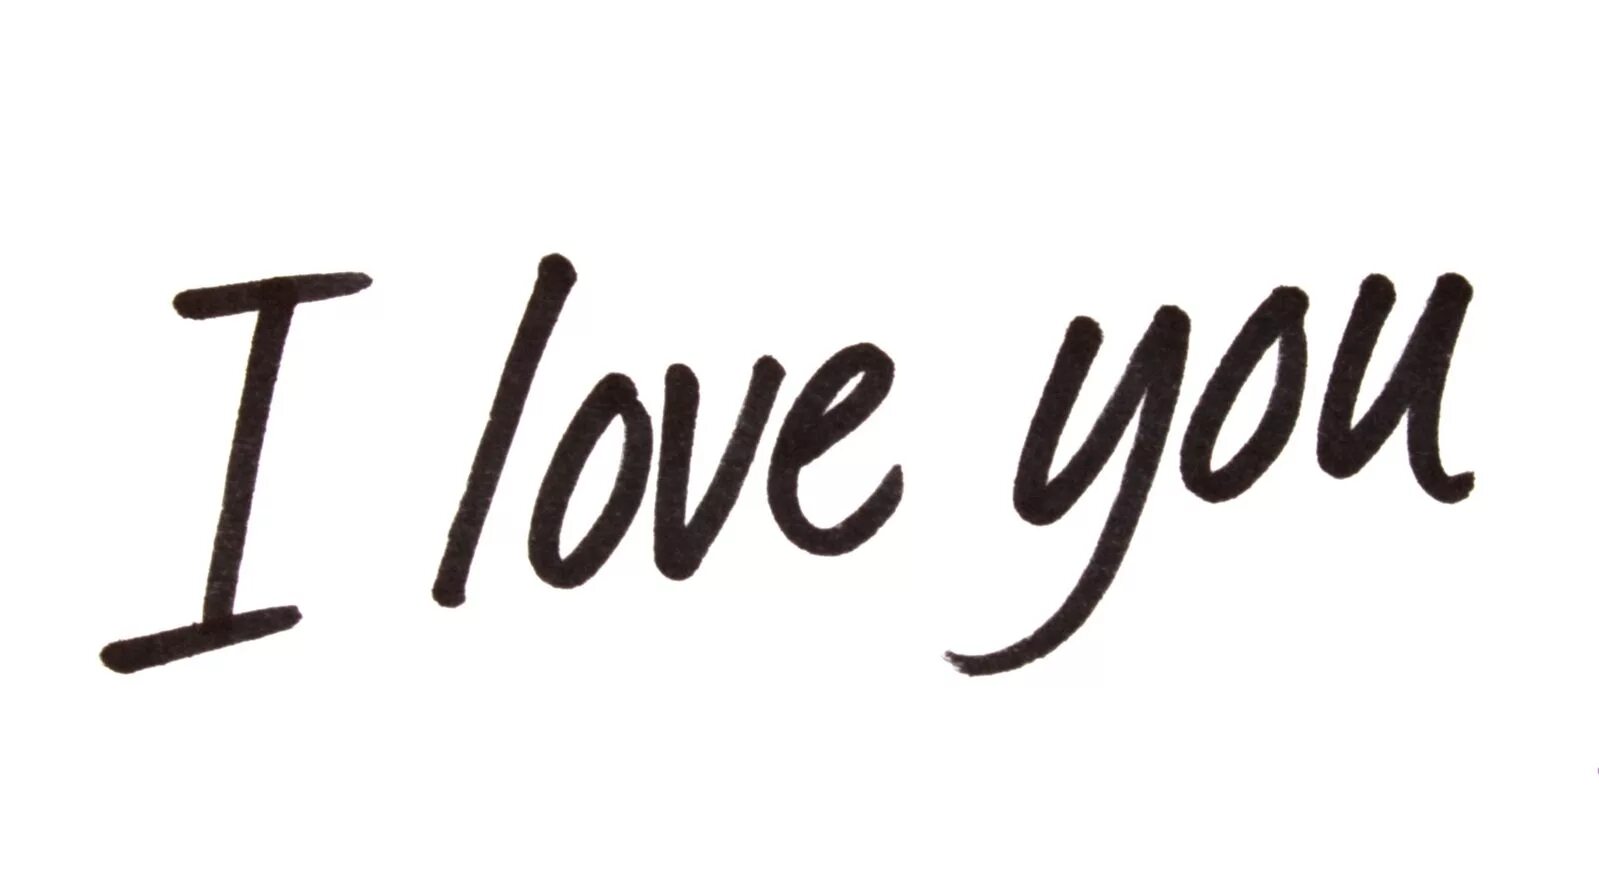 I love you шрифты. I Love you шрифт. Love you красивым шрифтом. Надпись i Love you красиво. Надпись Love you красивым шрифтом.